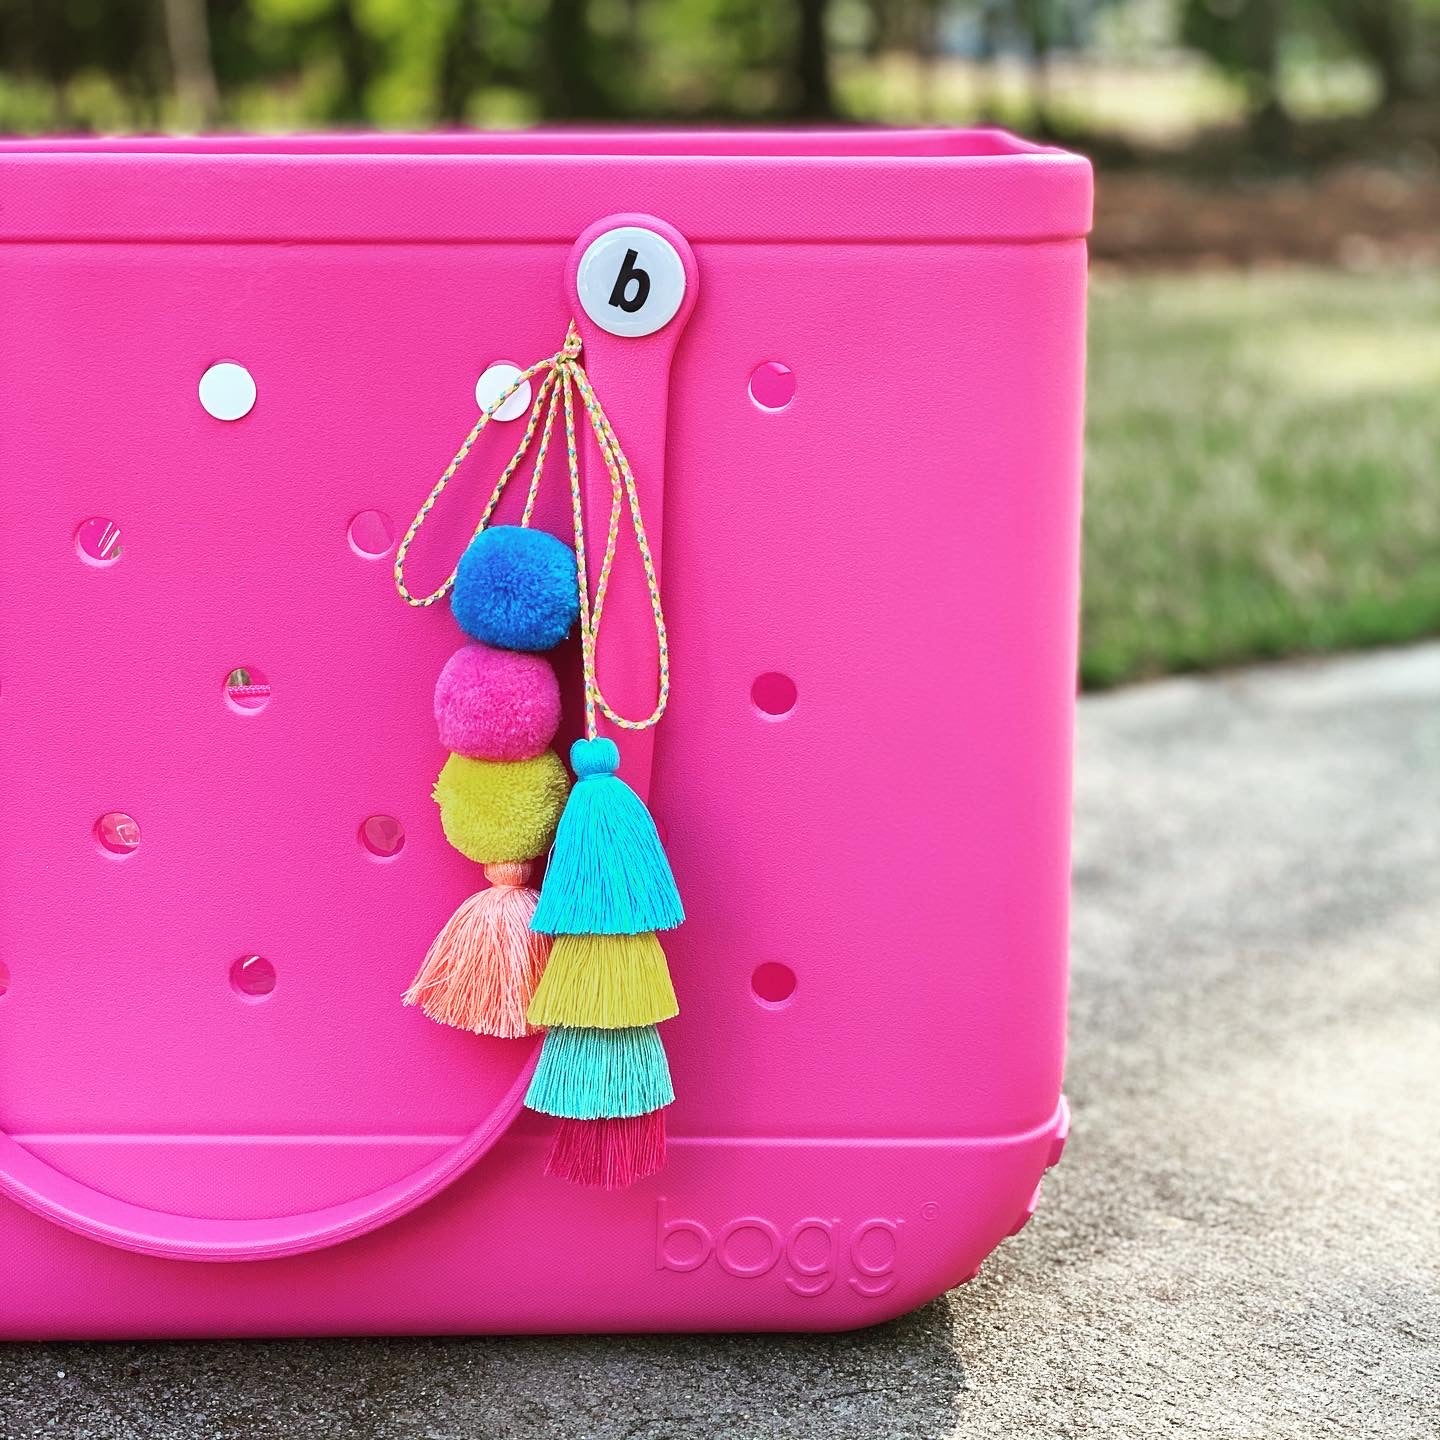 Pink & Black Polka Dot Tassel | Bogg Bag Decor | Car Charms | Car Accessories | Bogg Bag Monograms | Key Chain Decor | Personalized Bag Charms | Bogg